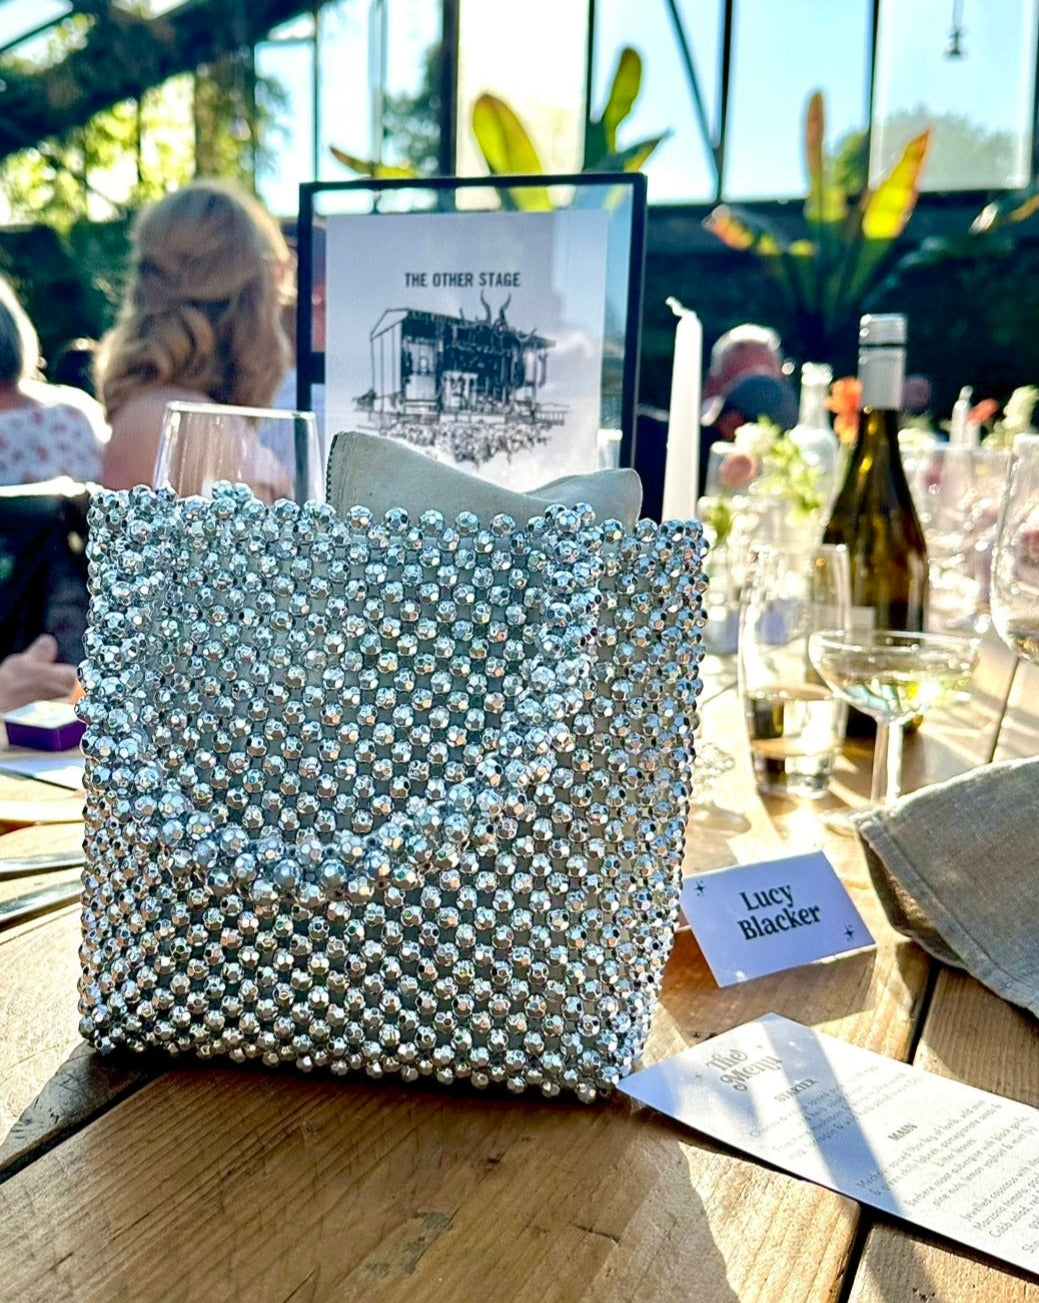 Silver Sparkle Handbag | Bridal | Occasion Accessory